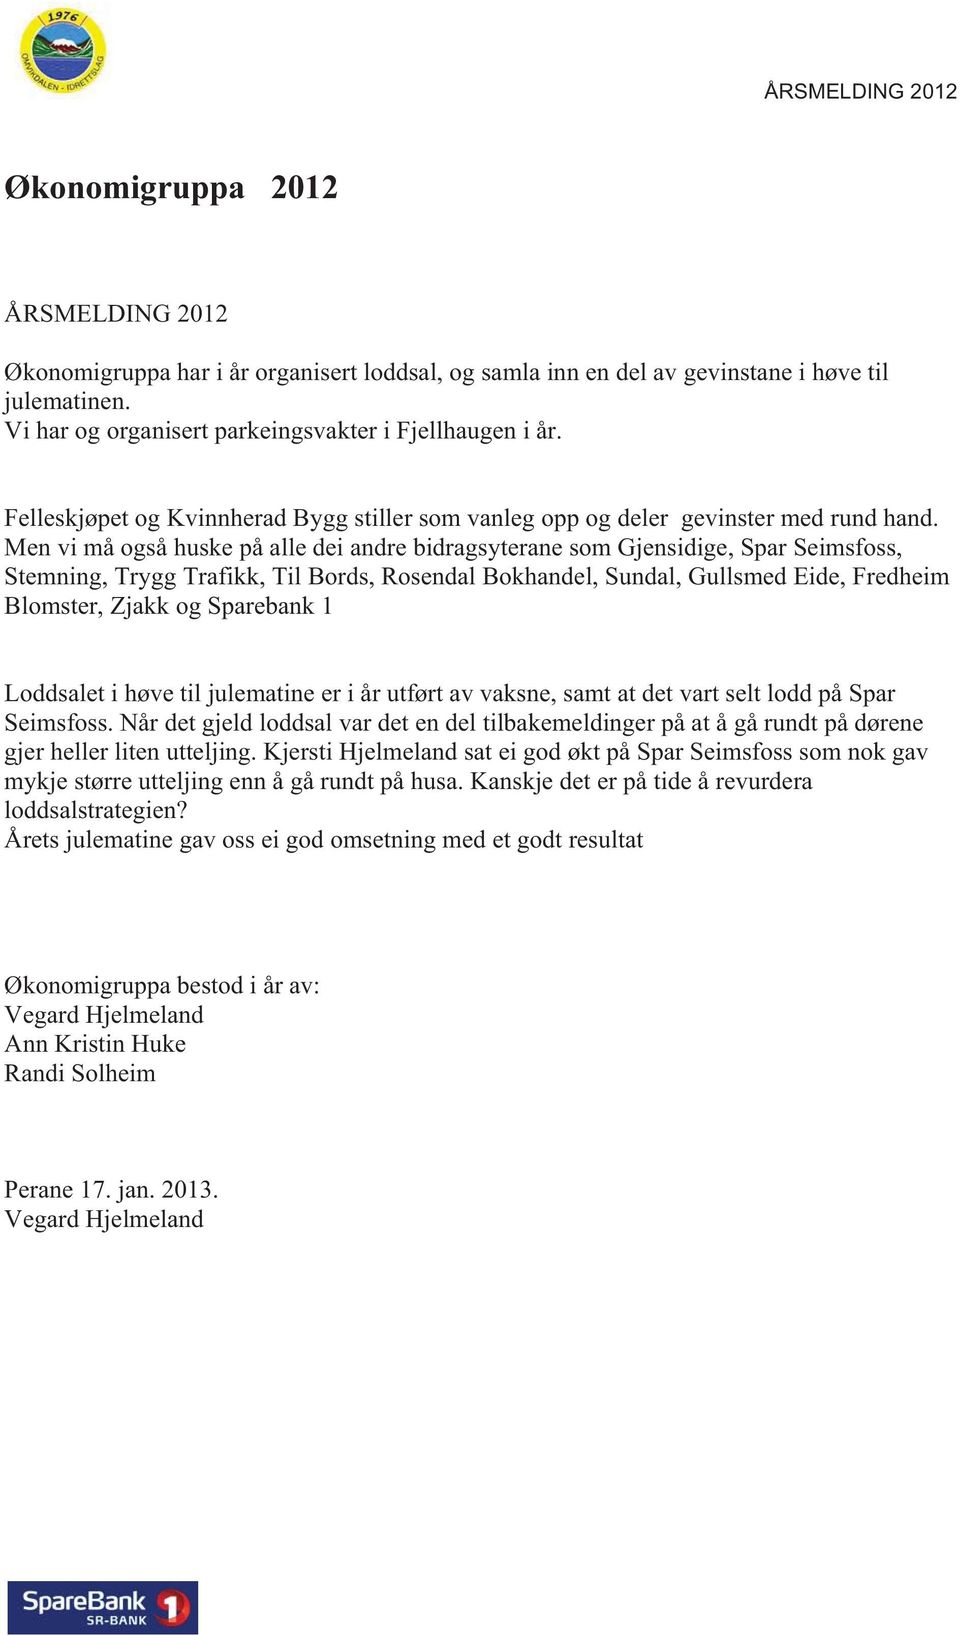 Årsmelding for styret i Omvikdalen Idrettslag PDF Free Download